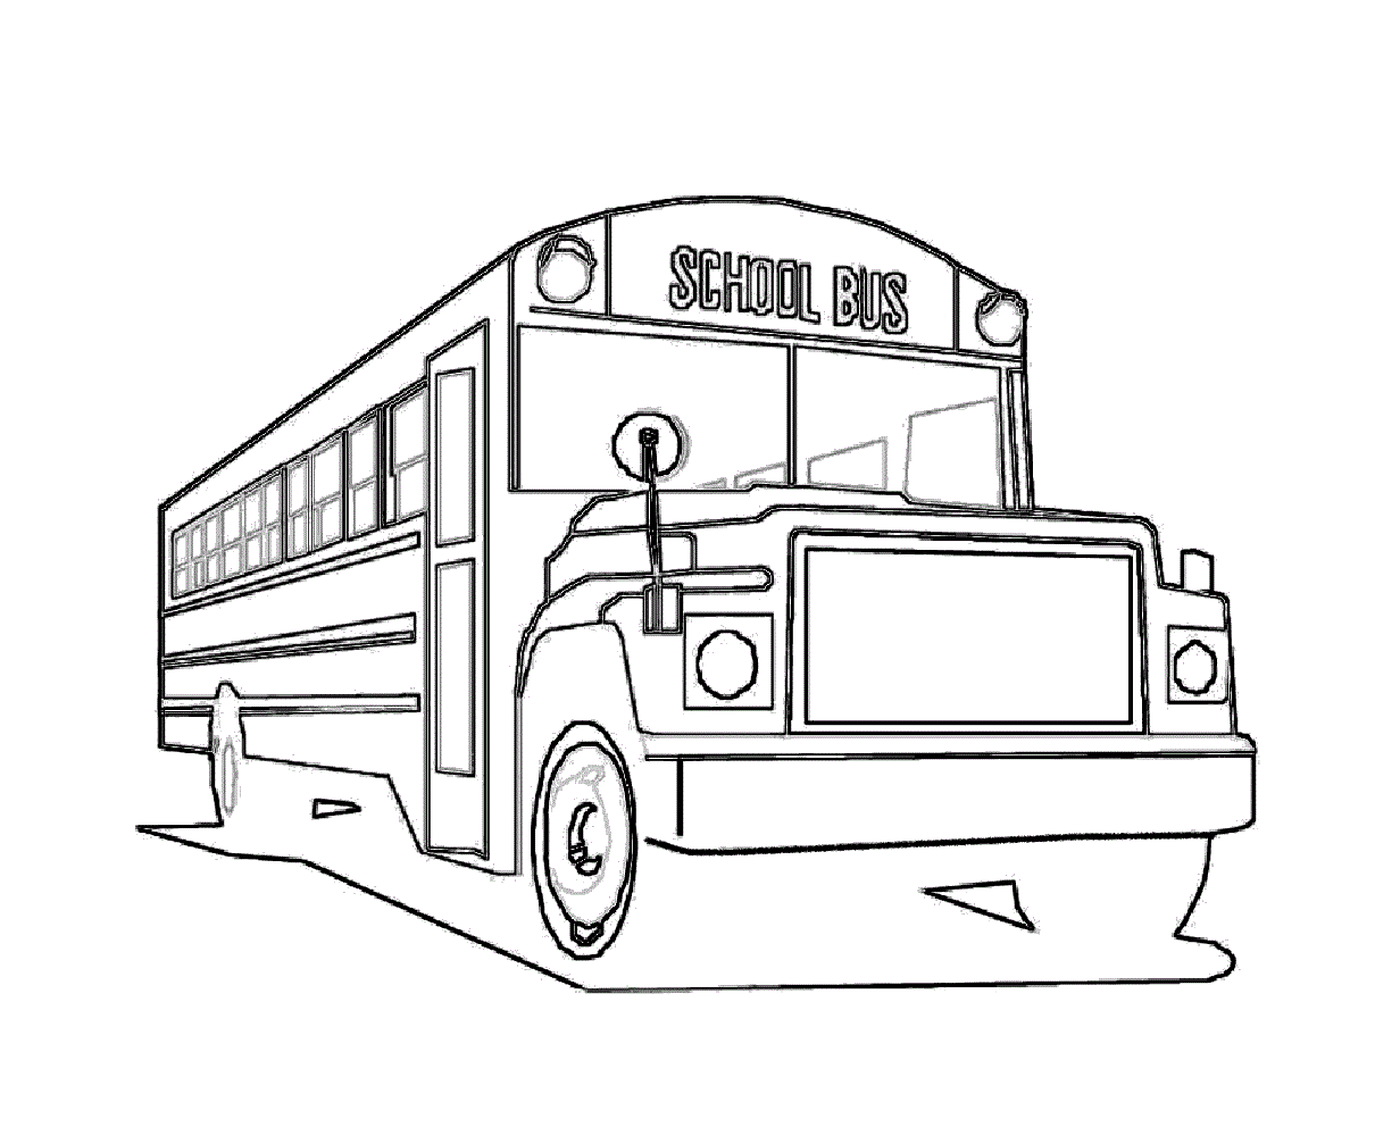  A cool school bus 